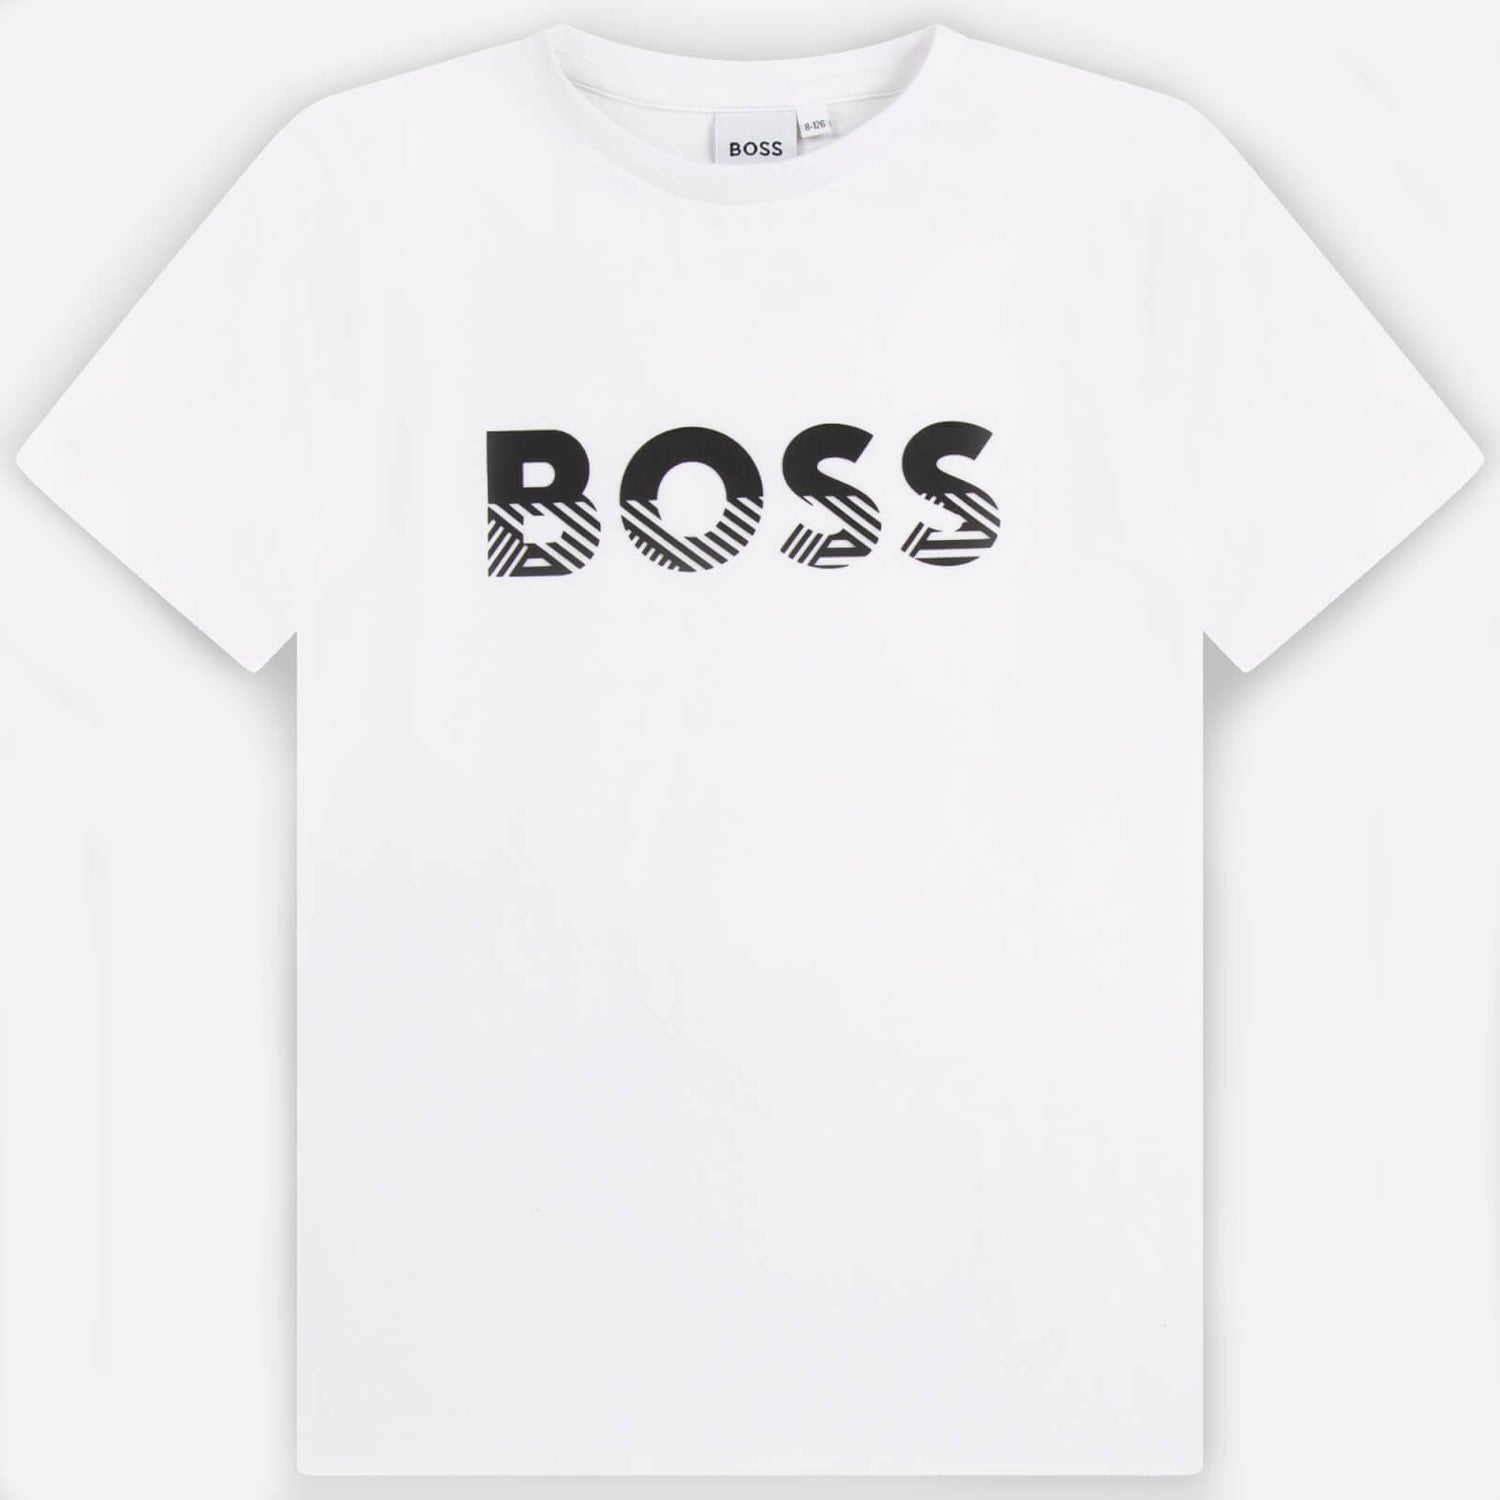 Hugo Boss Boys' Cotton T-Shirt - 5 Years